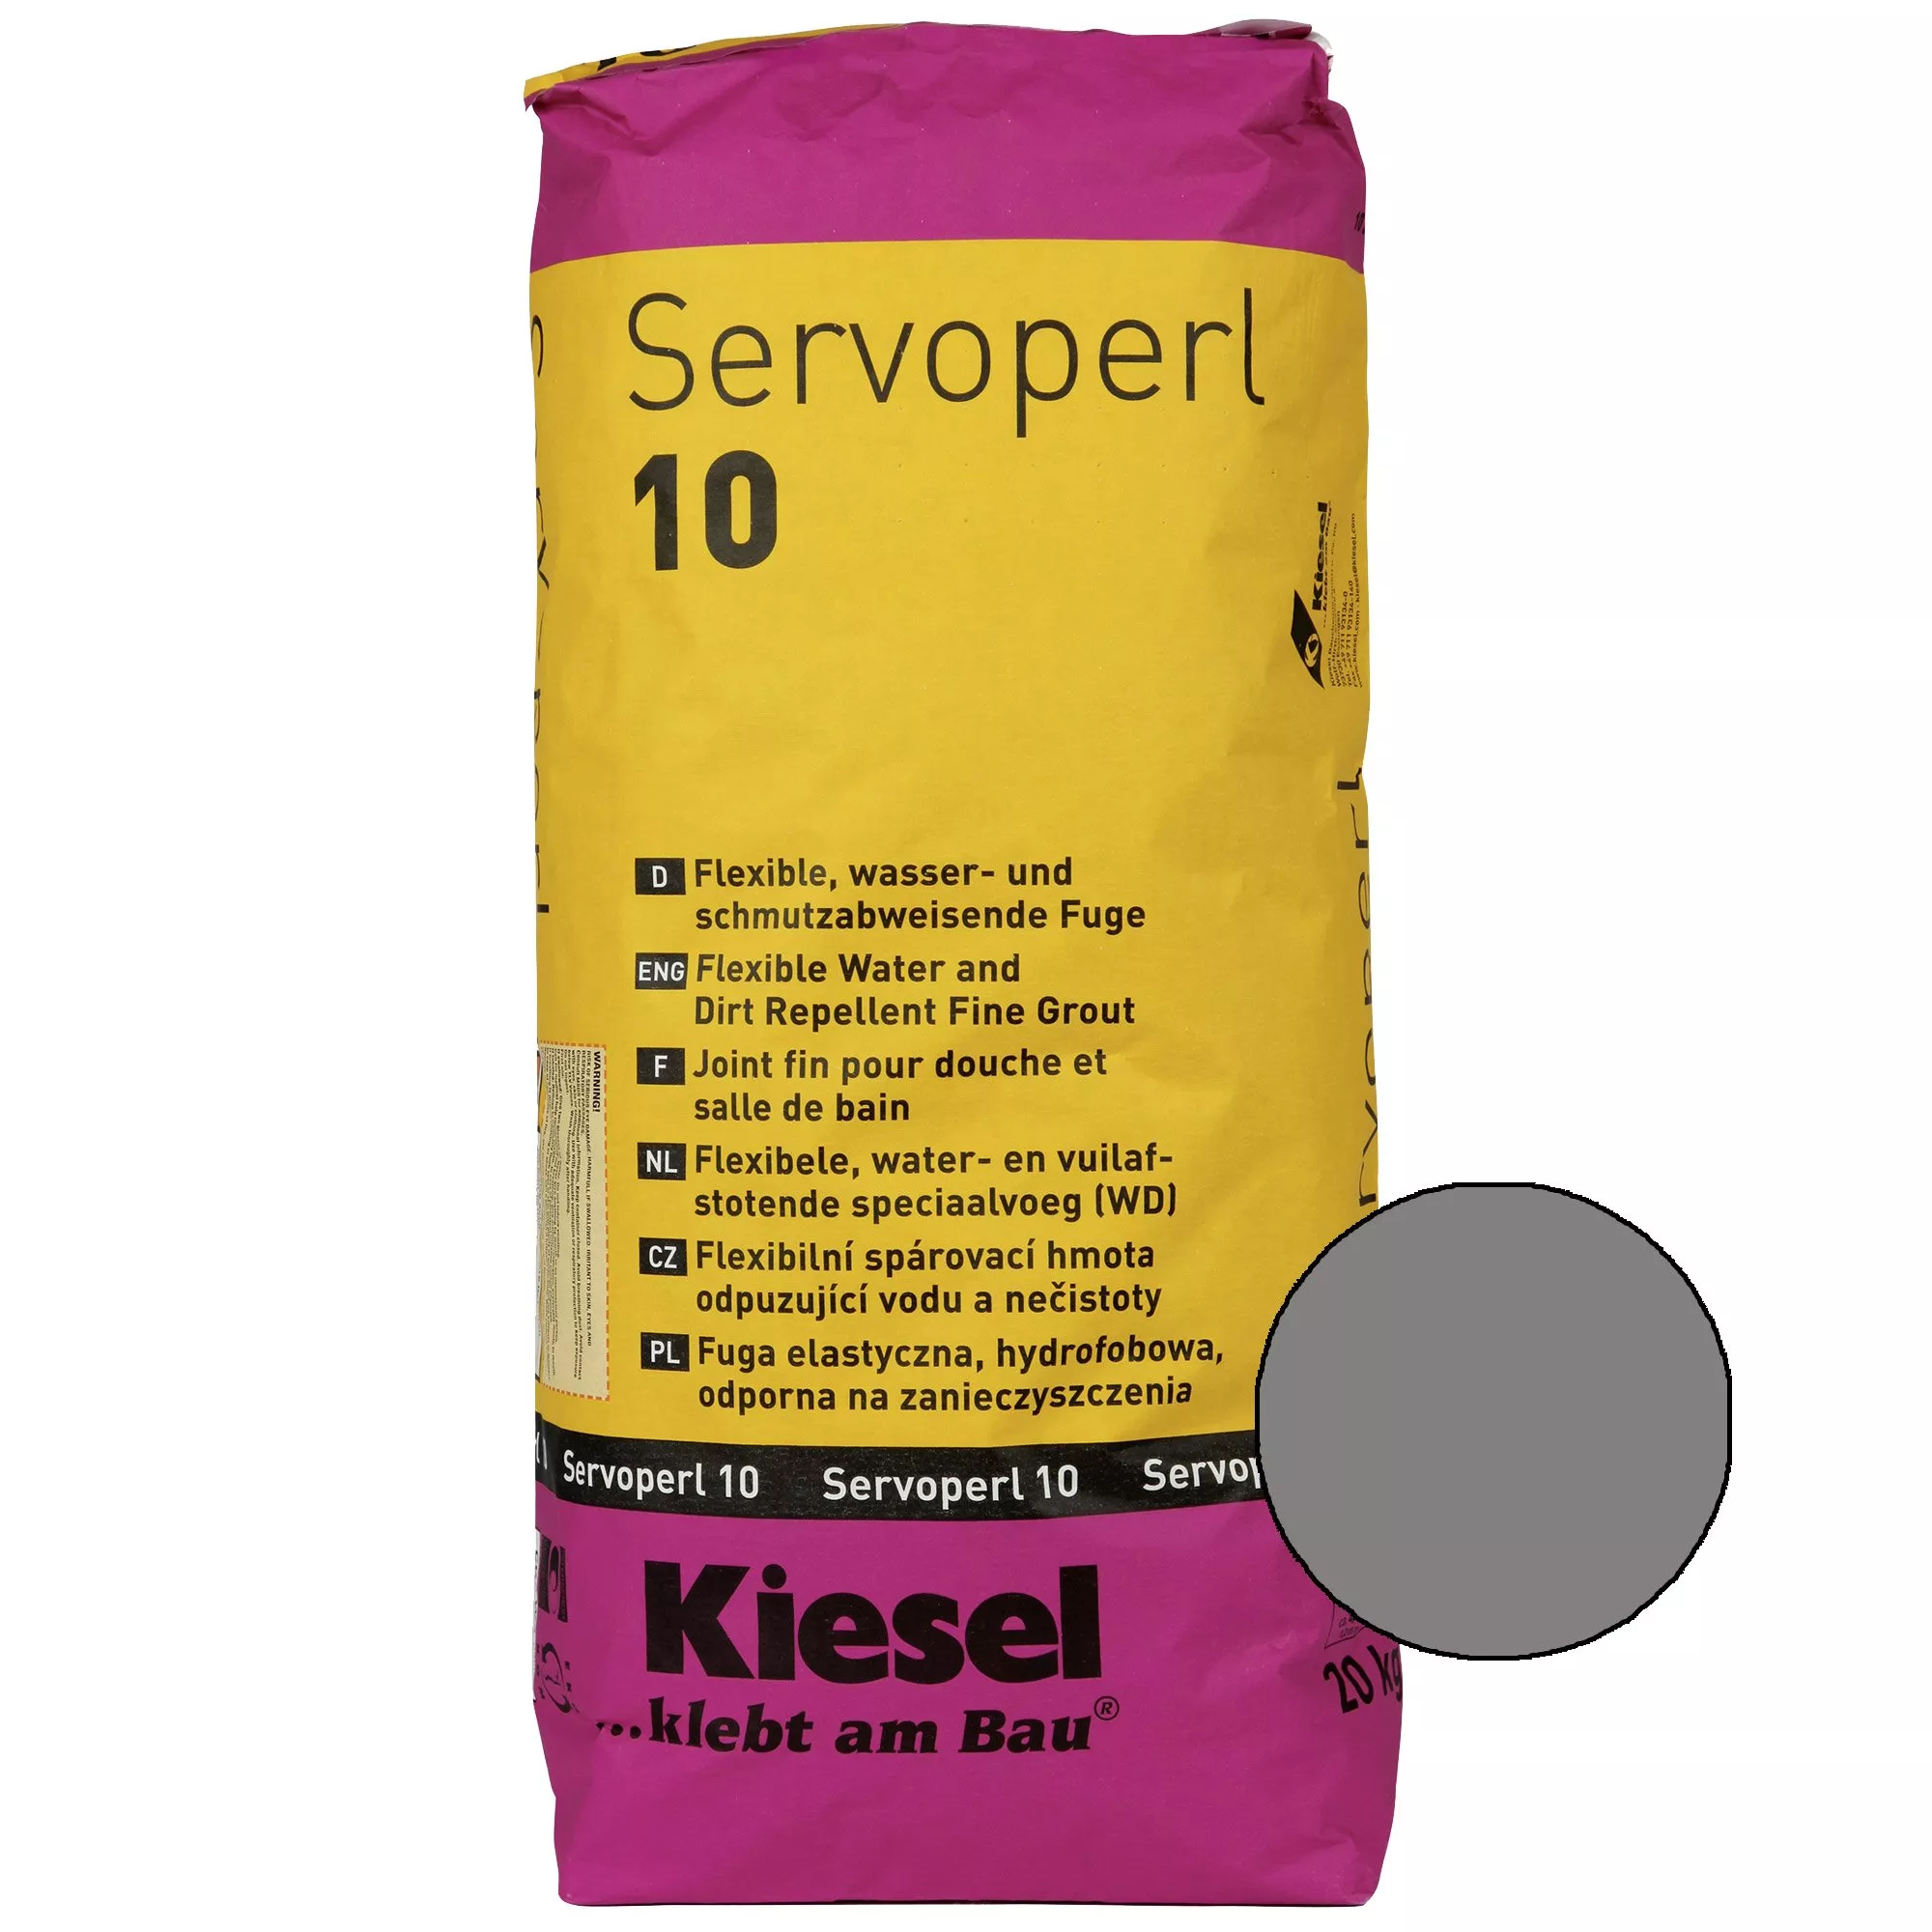 Kiesel Servoperl 10 - Flexible zementäre Fuge (20KG Mittelgrau)